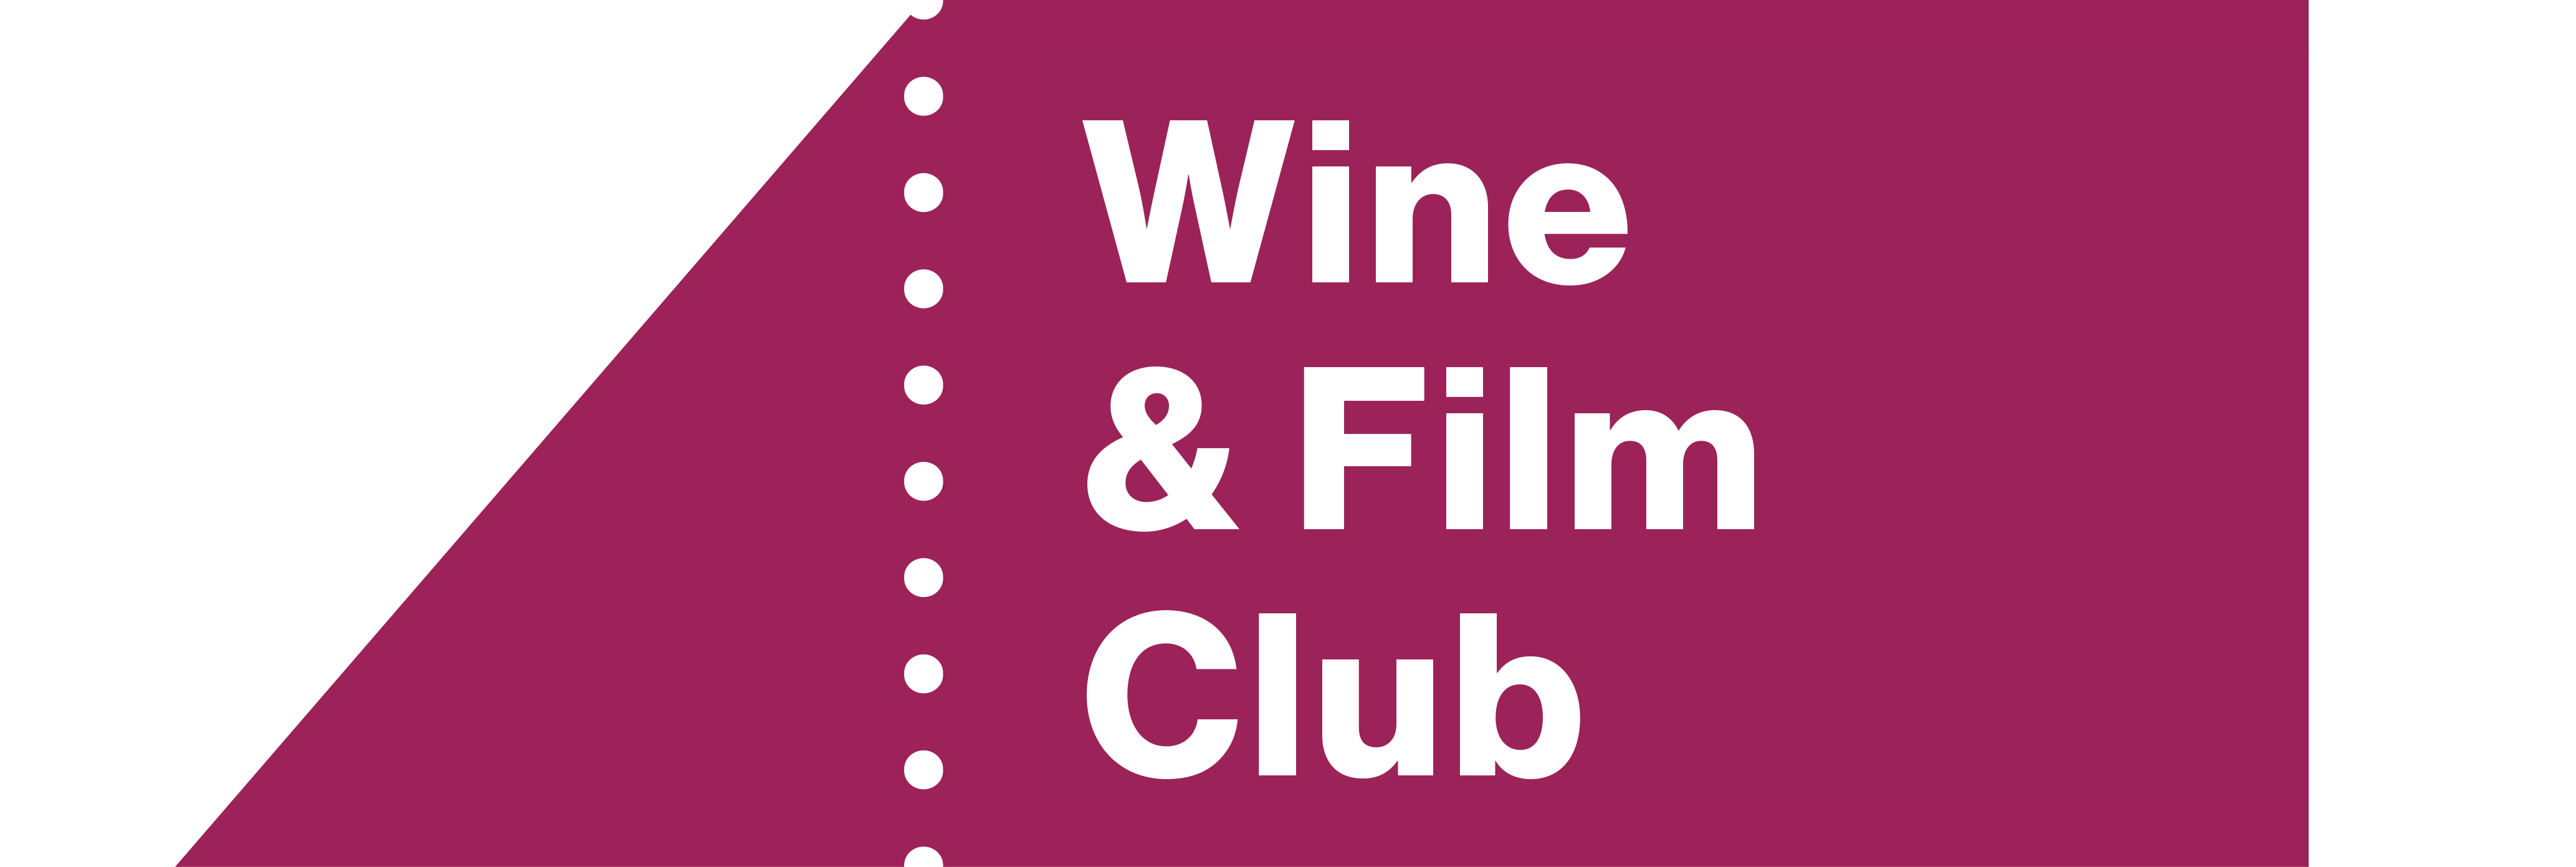 WINE & FILM CLUB